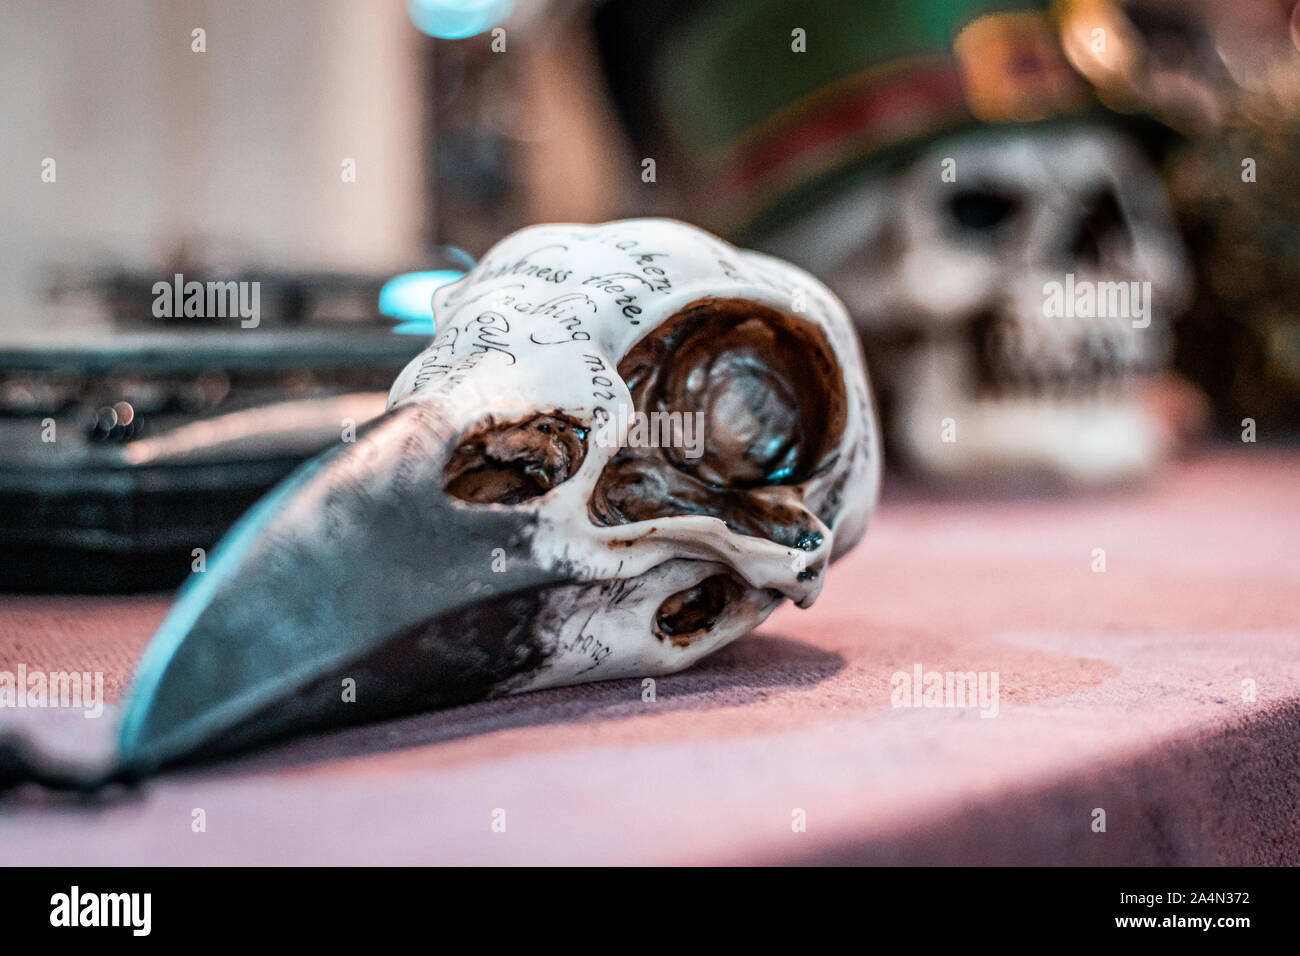 Dia de los muertos. Animal skull for dark rituals. Halloween horror and terror themes. Satanic cult objects. Stock Photo